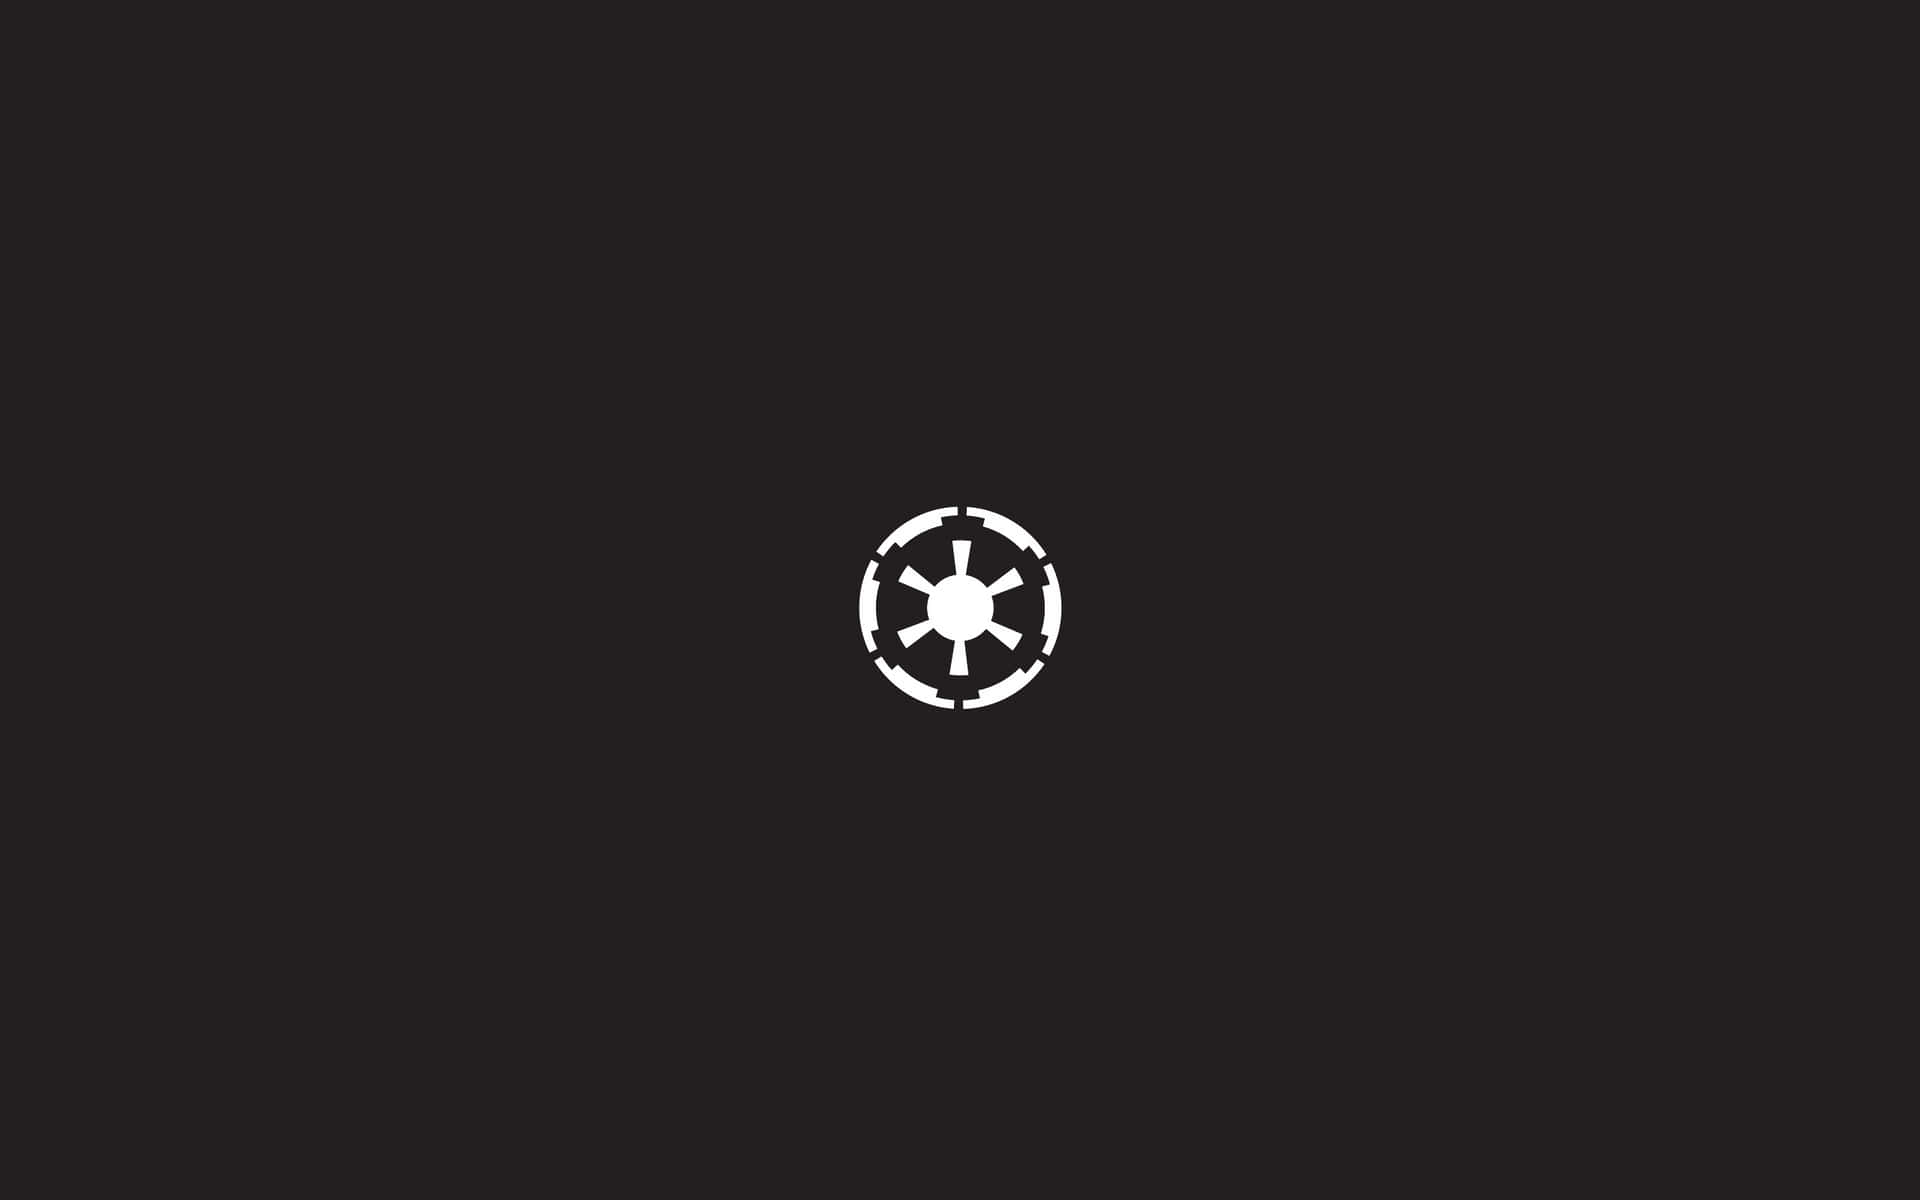 Star Wars Logo On A Black Background Wallpaper